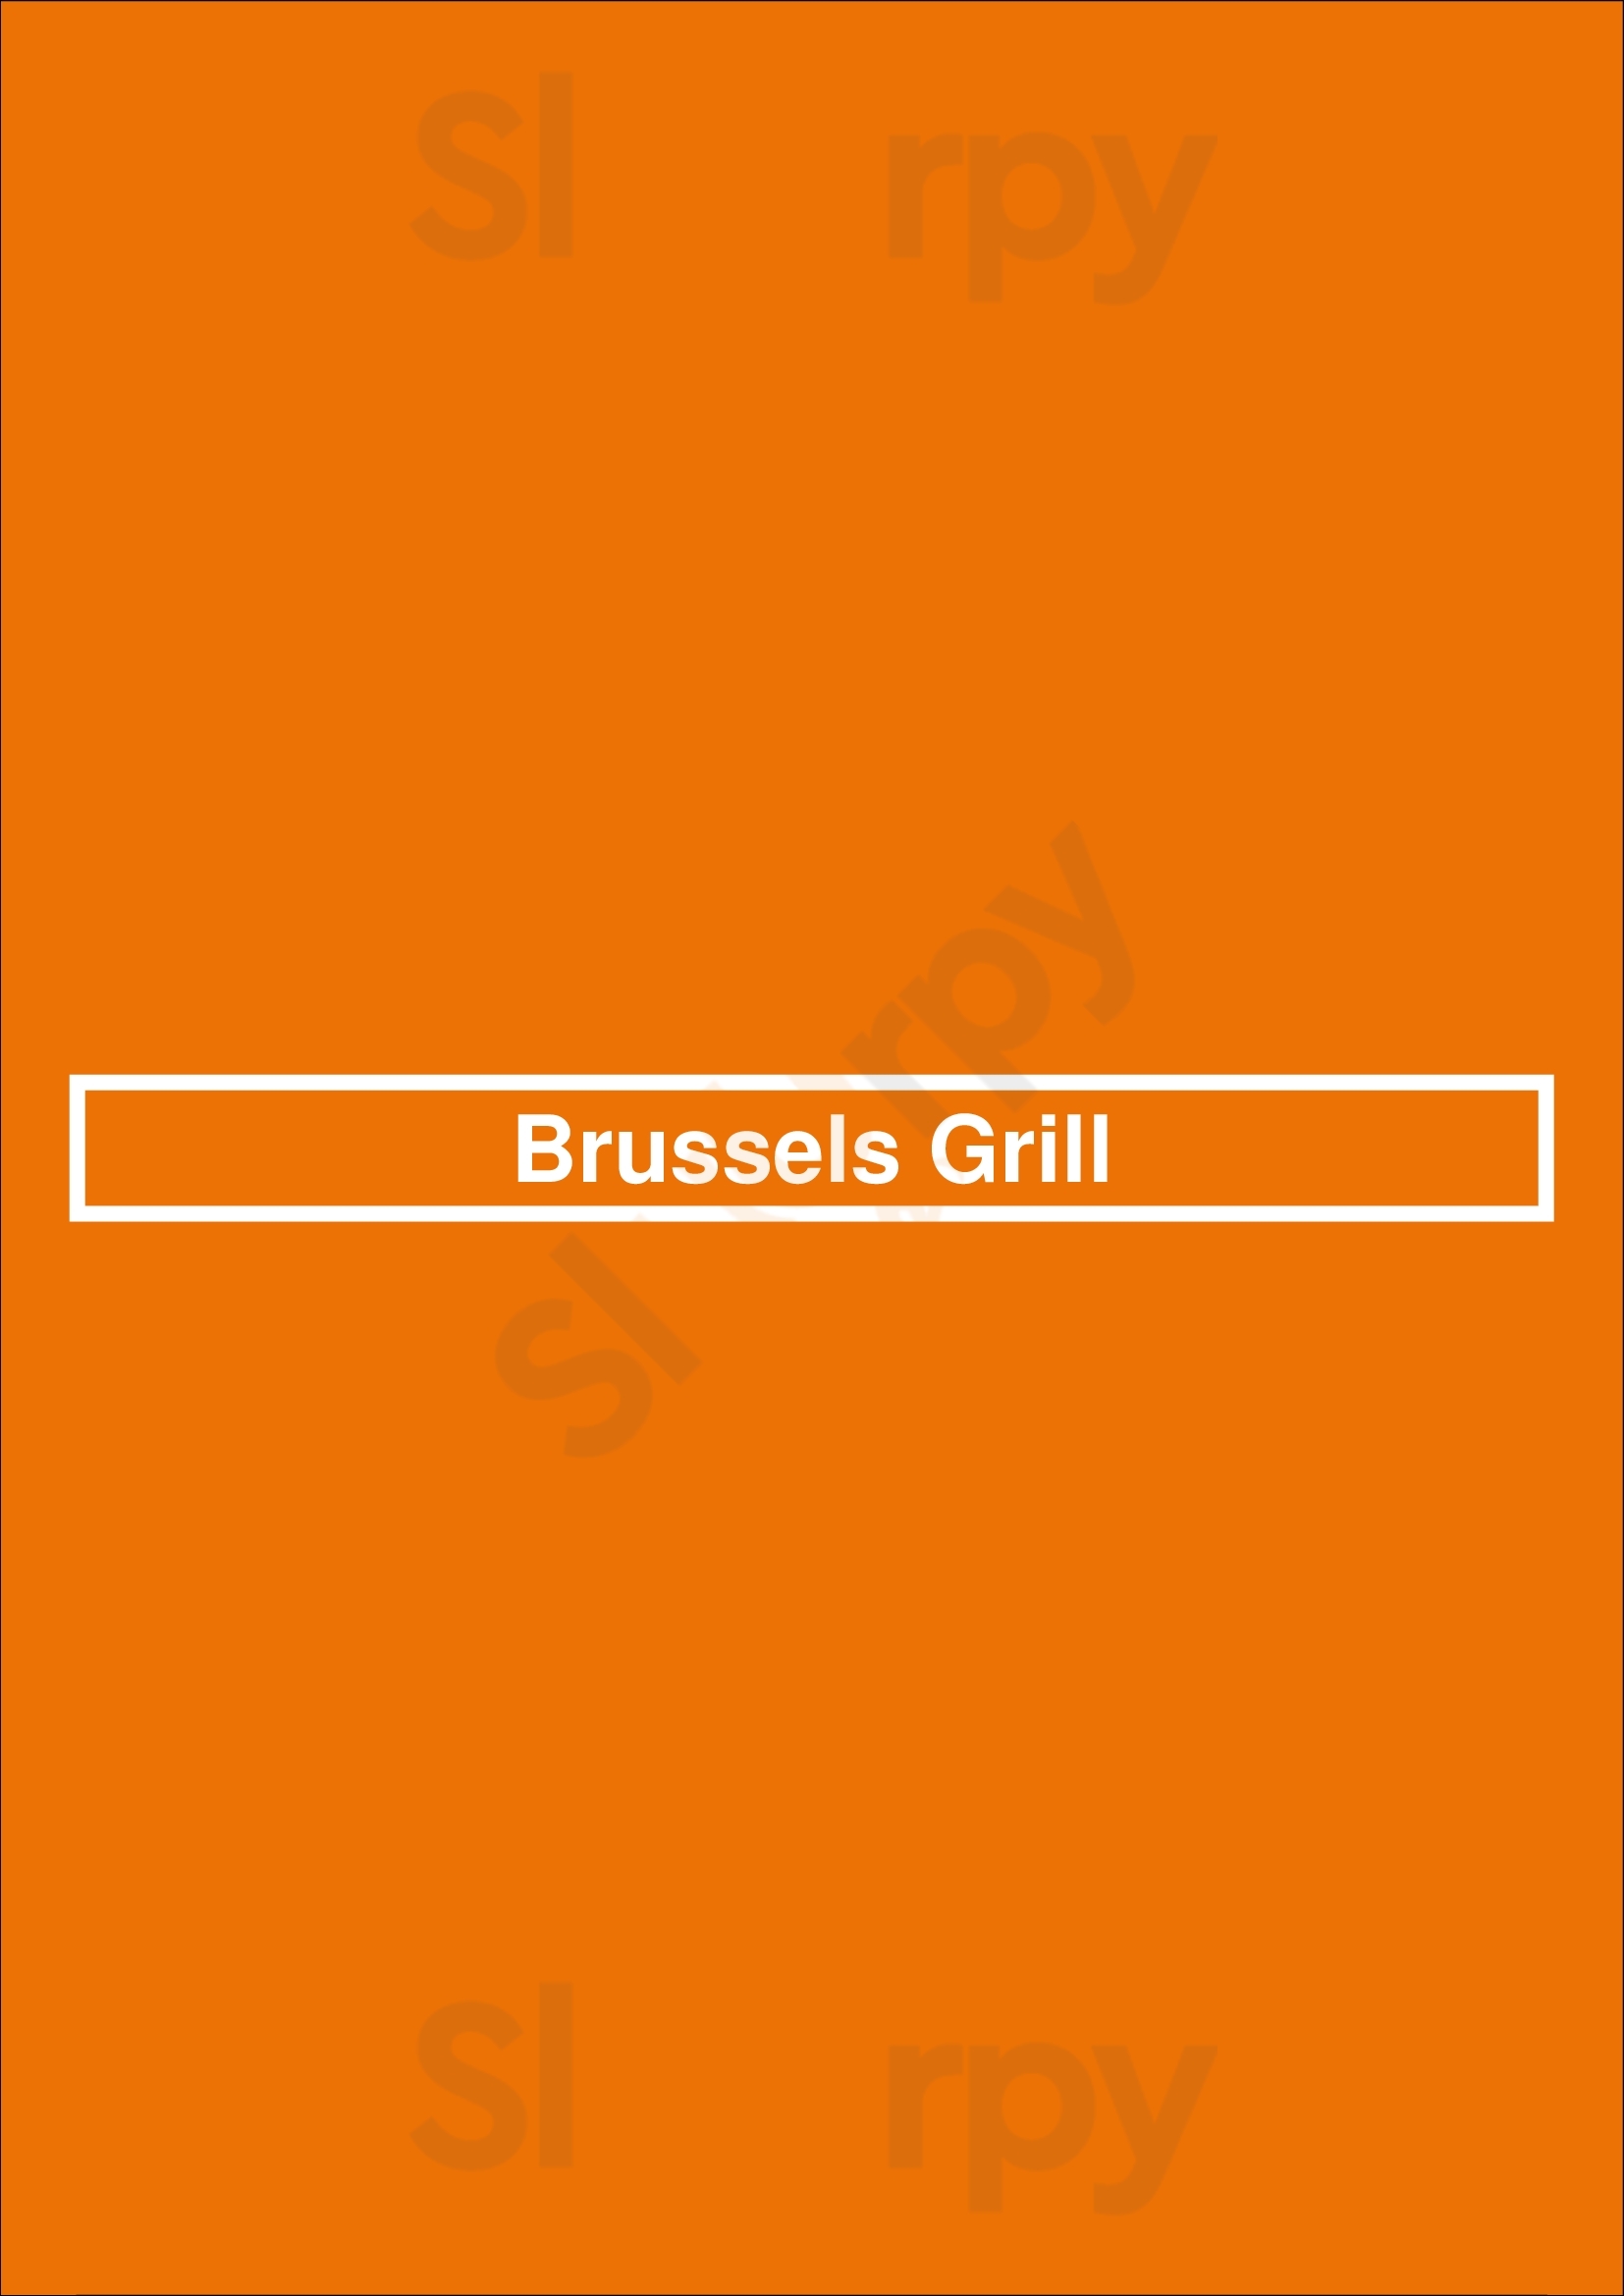 Brussels Grill Bruxelles Menu - 1